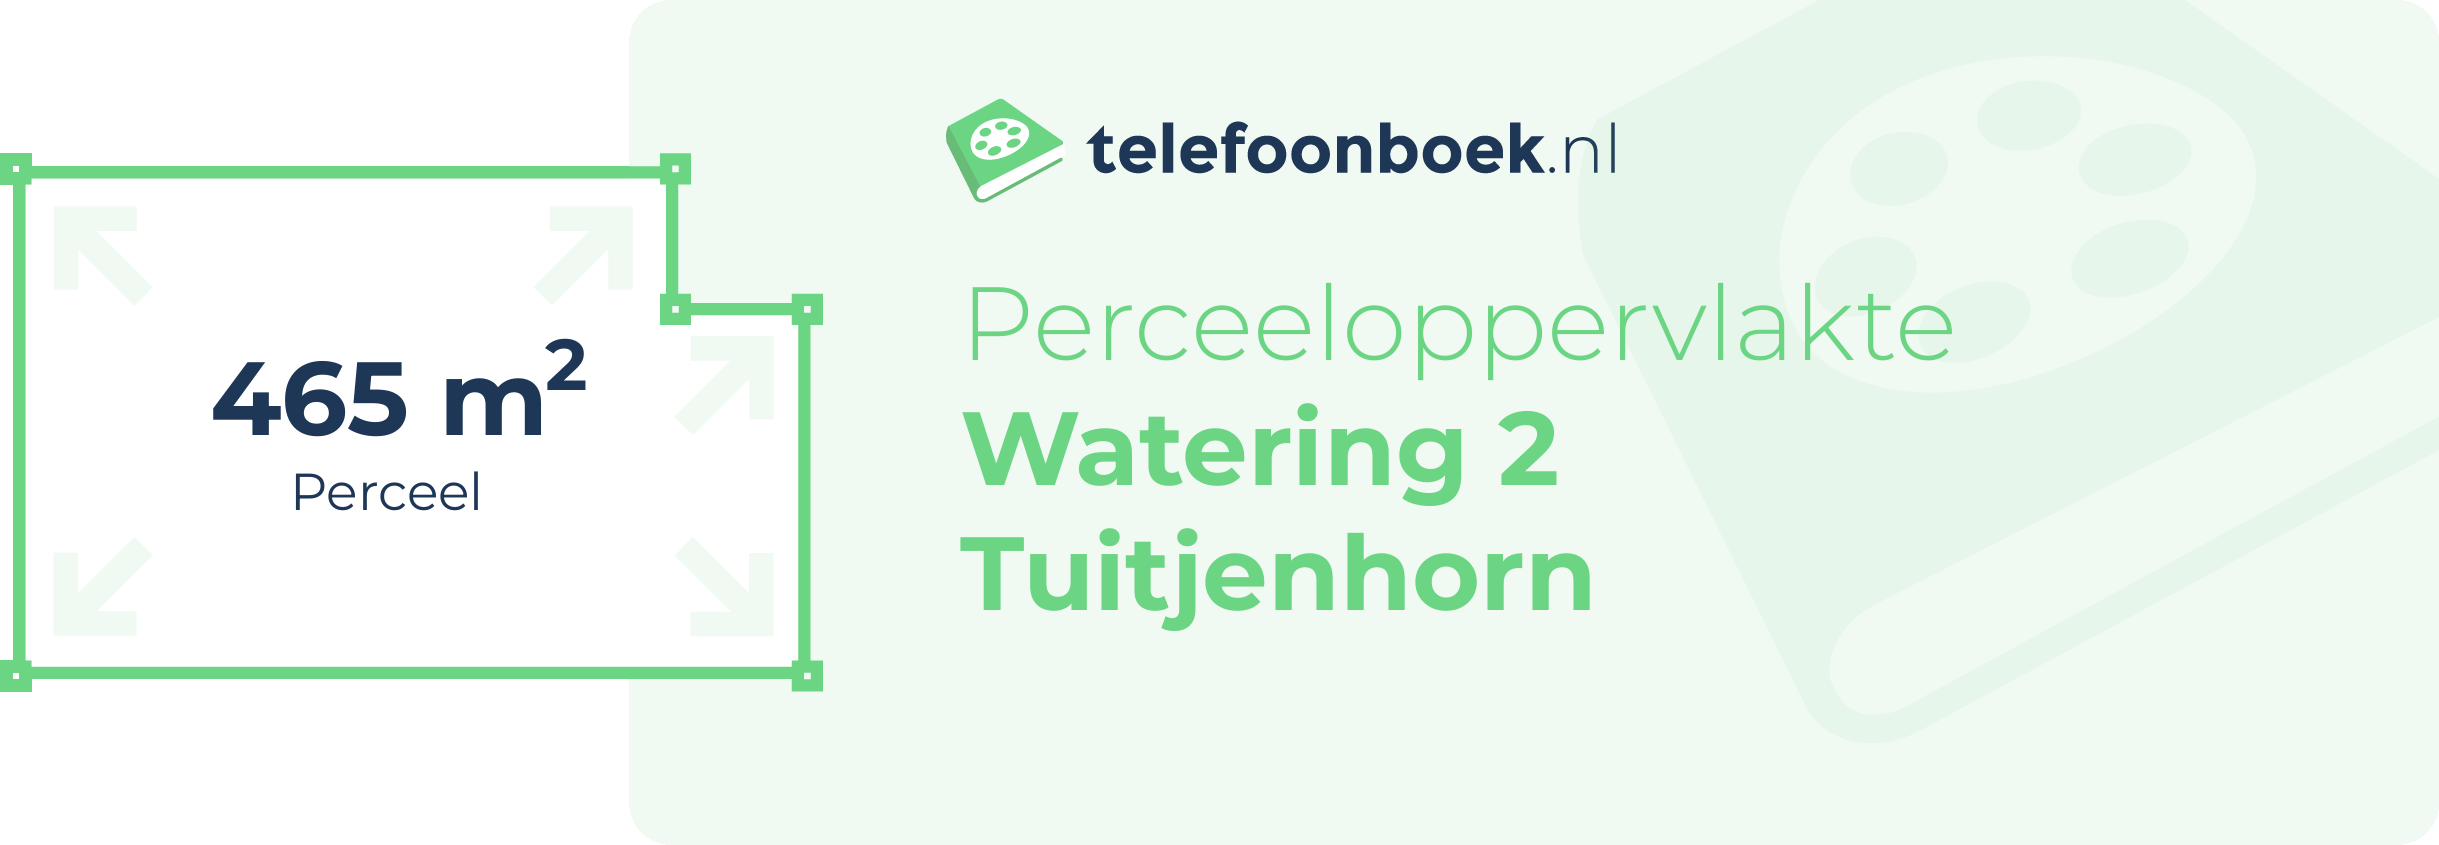 Perceeloppervlakte Watering 2 Tuitjenhorn